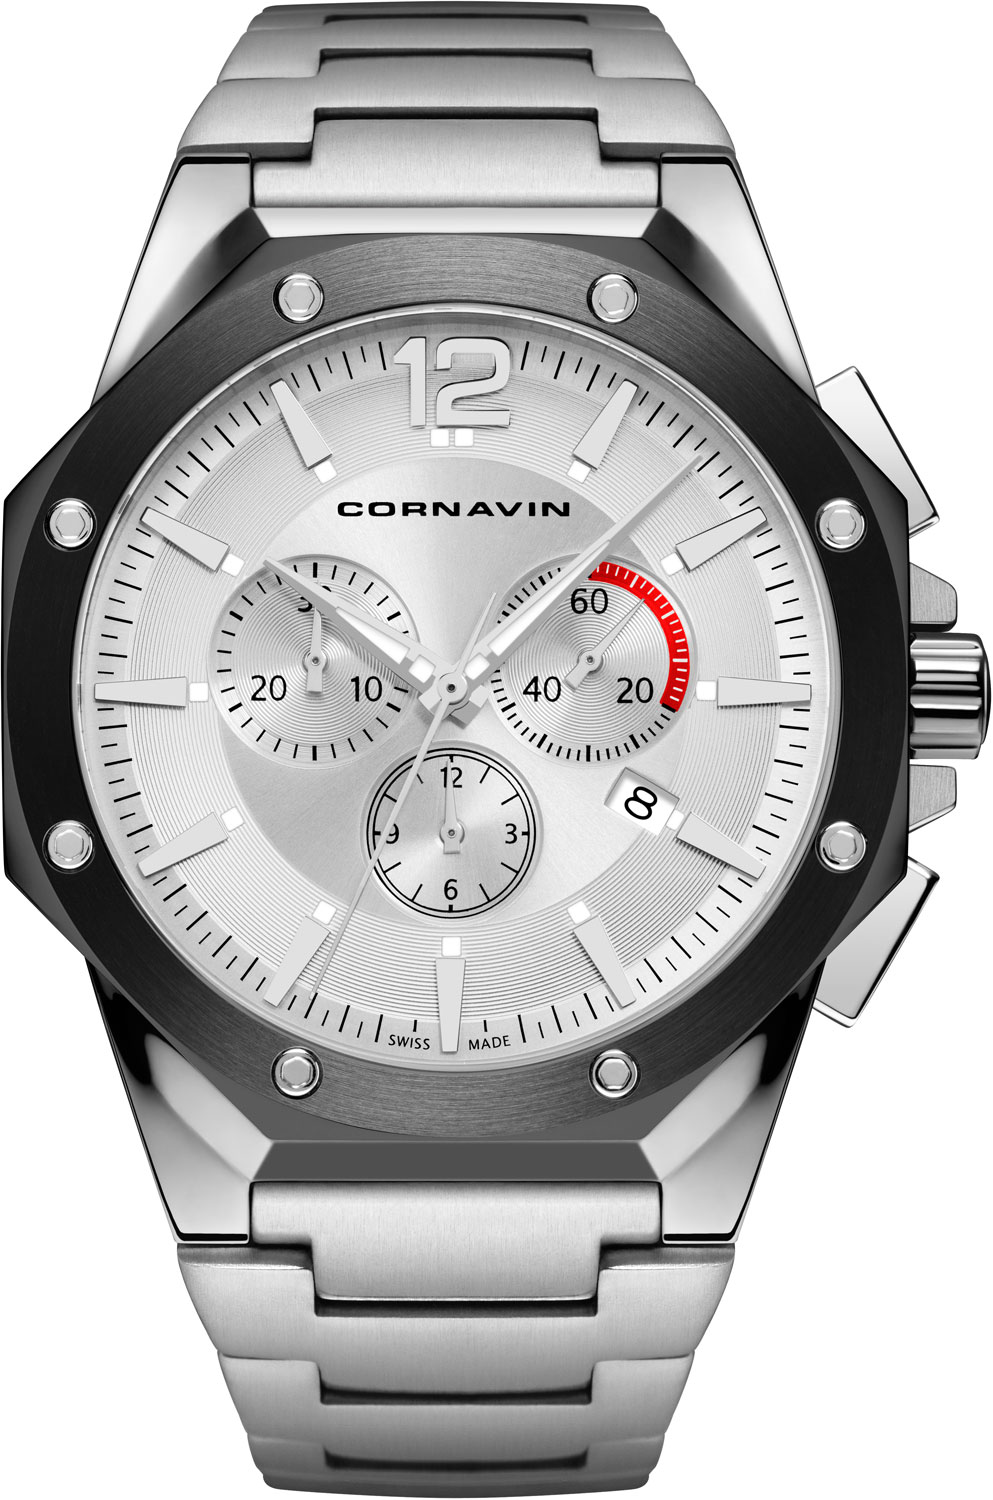 Швейцарские наручные часы Cornavin CO.2010-2008 с хронографом